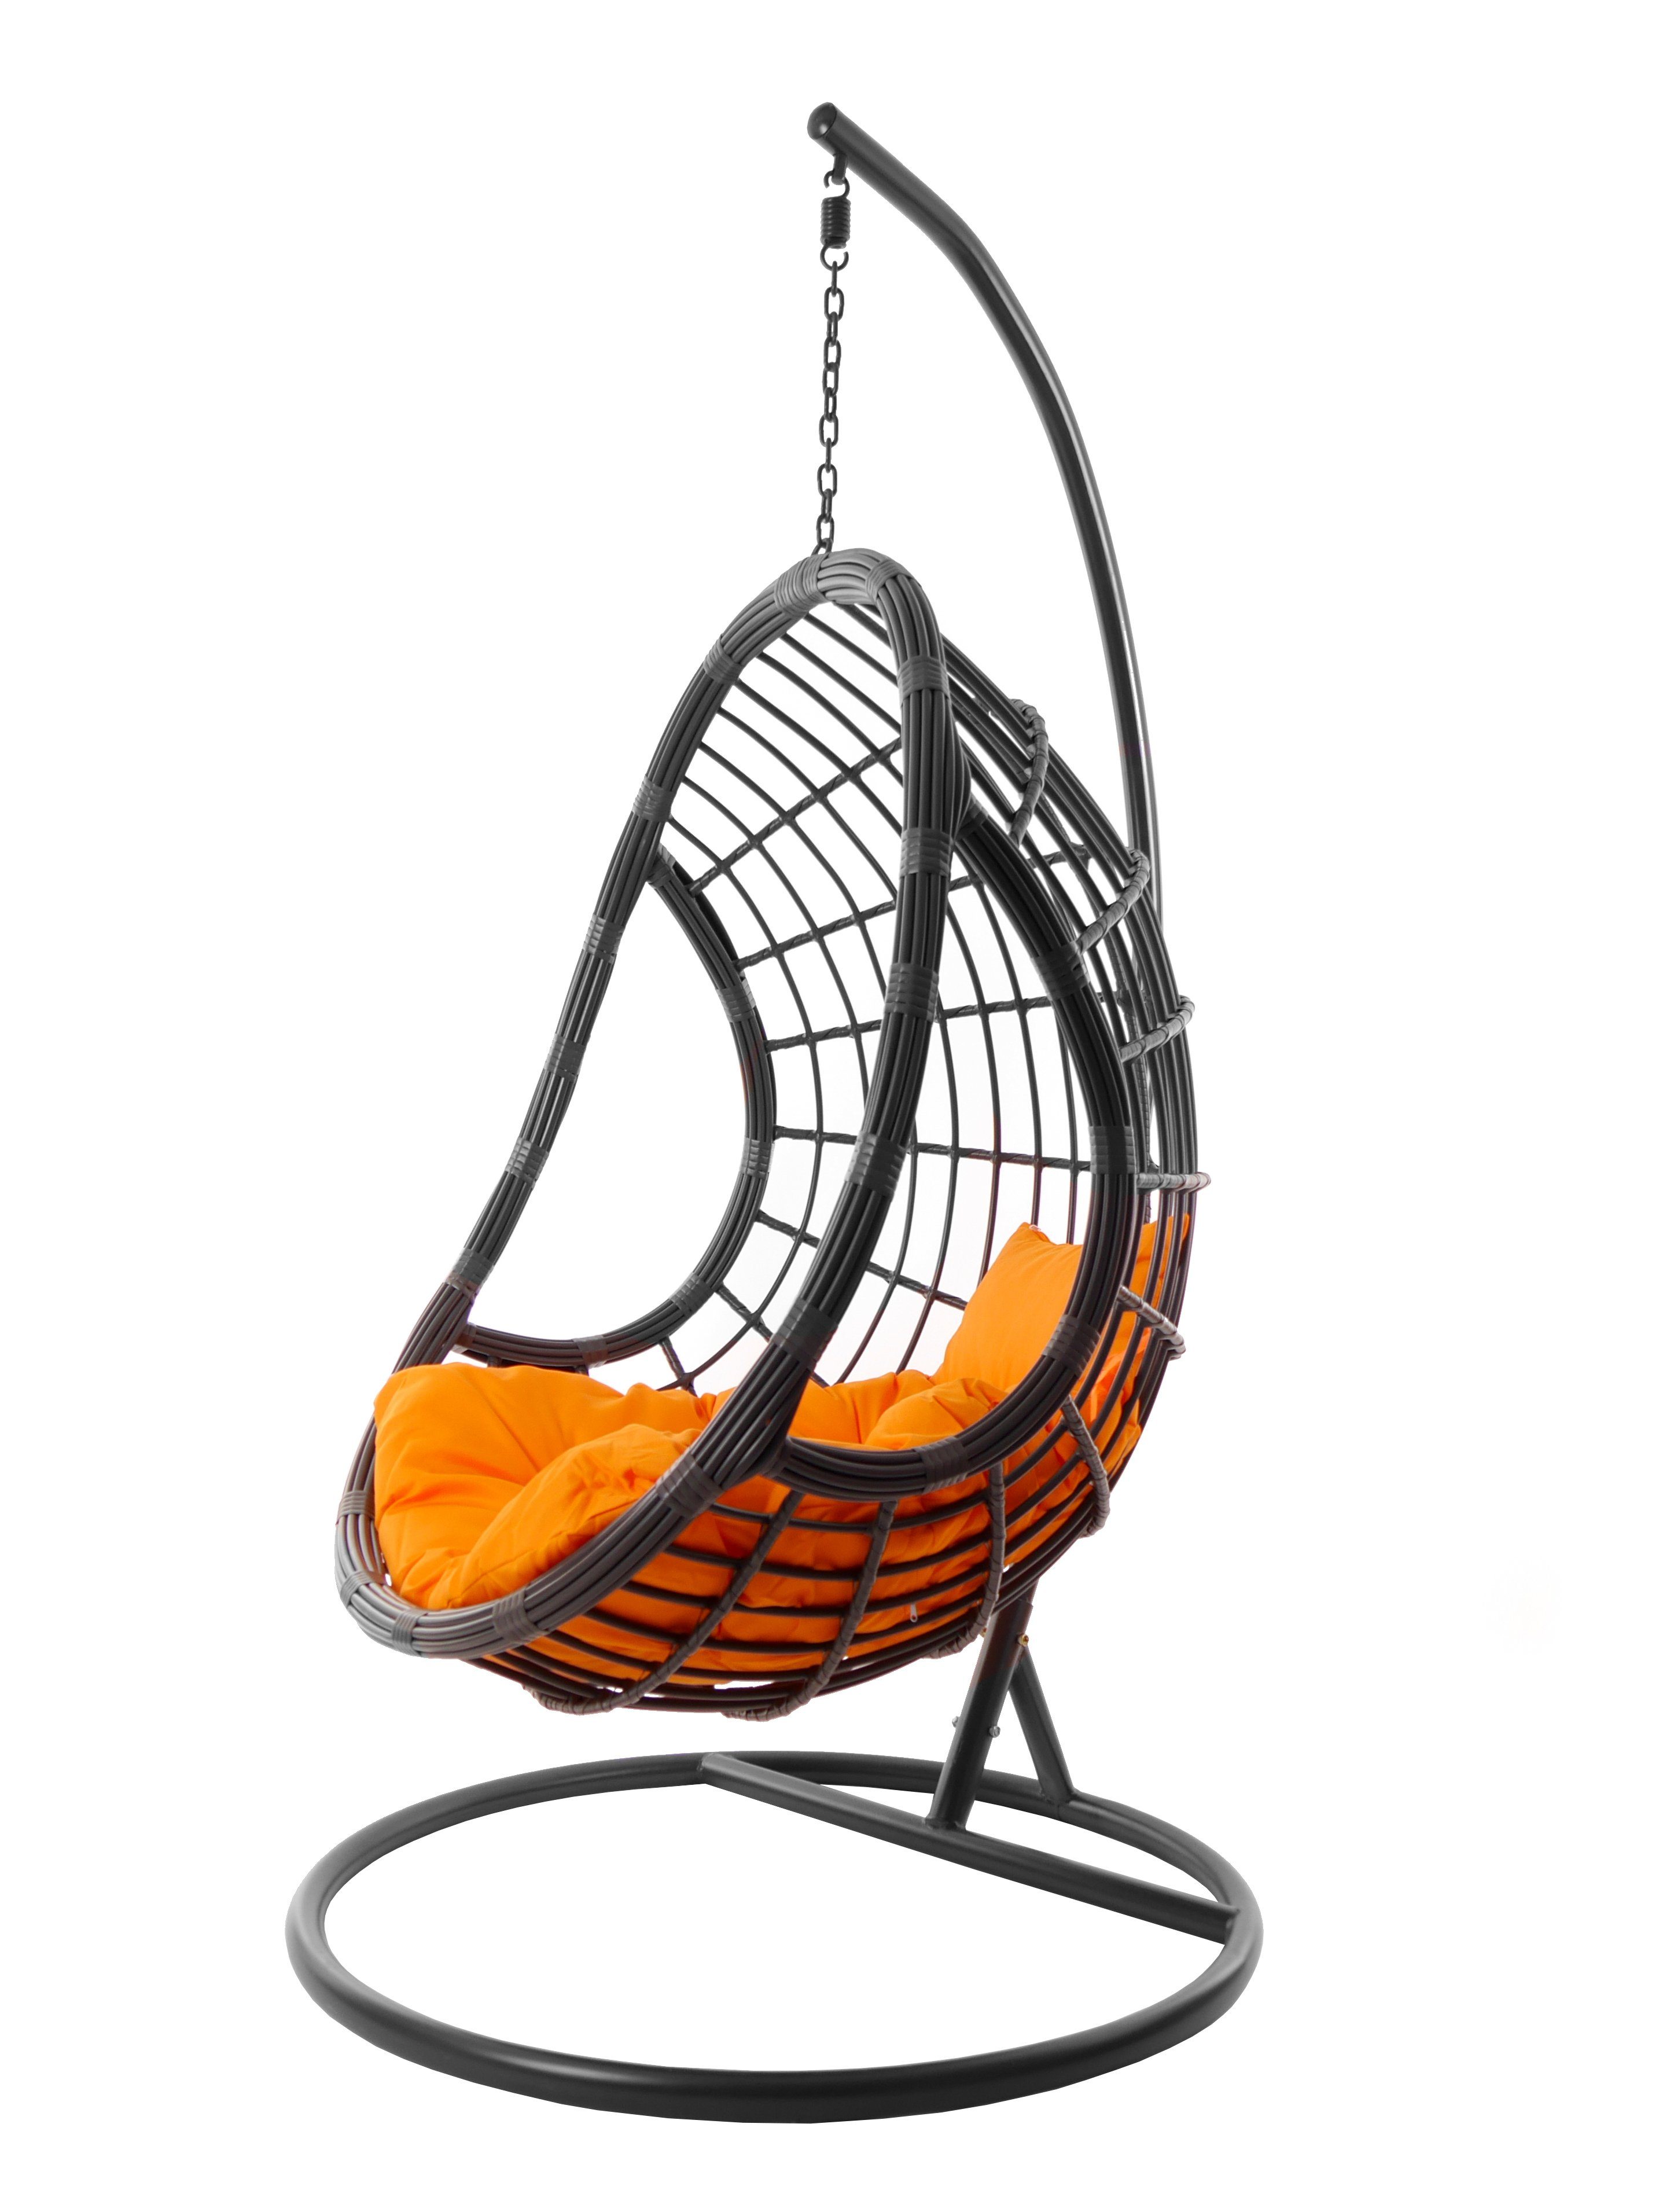 KIDEO Hängesessel Hängesessel PALMANOVA grau, eleganter Hängestuhl in grau, inklusive Gestell und Kissen orange (3030 tangerine)